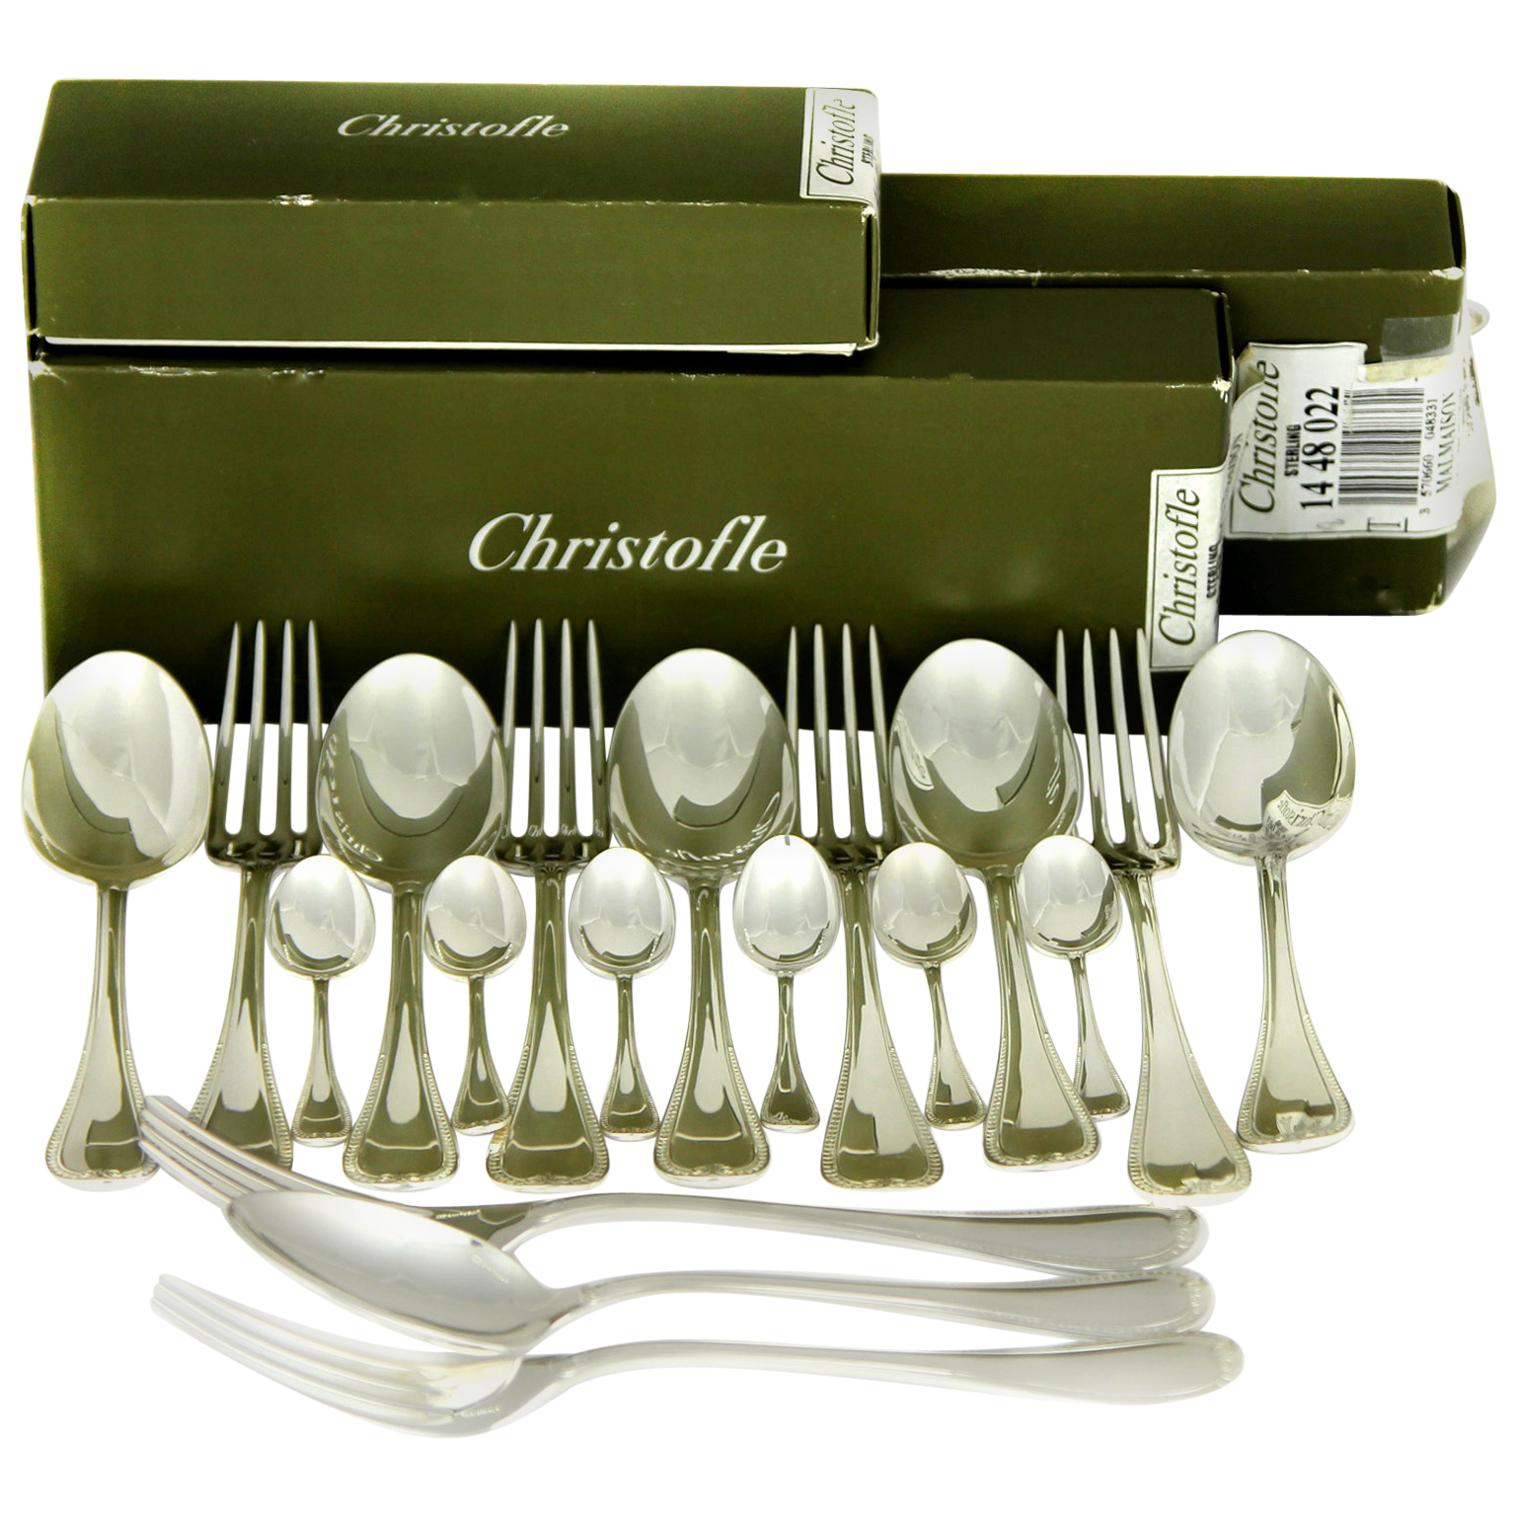 Christofle, Malmaison Solid Silver 18-Piece Set of Spoon, Fork & Tea-spoon